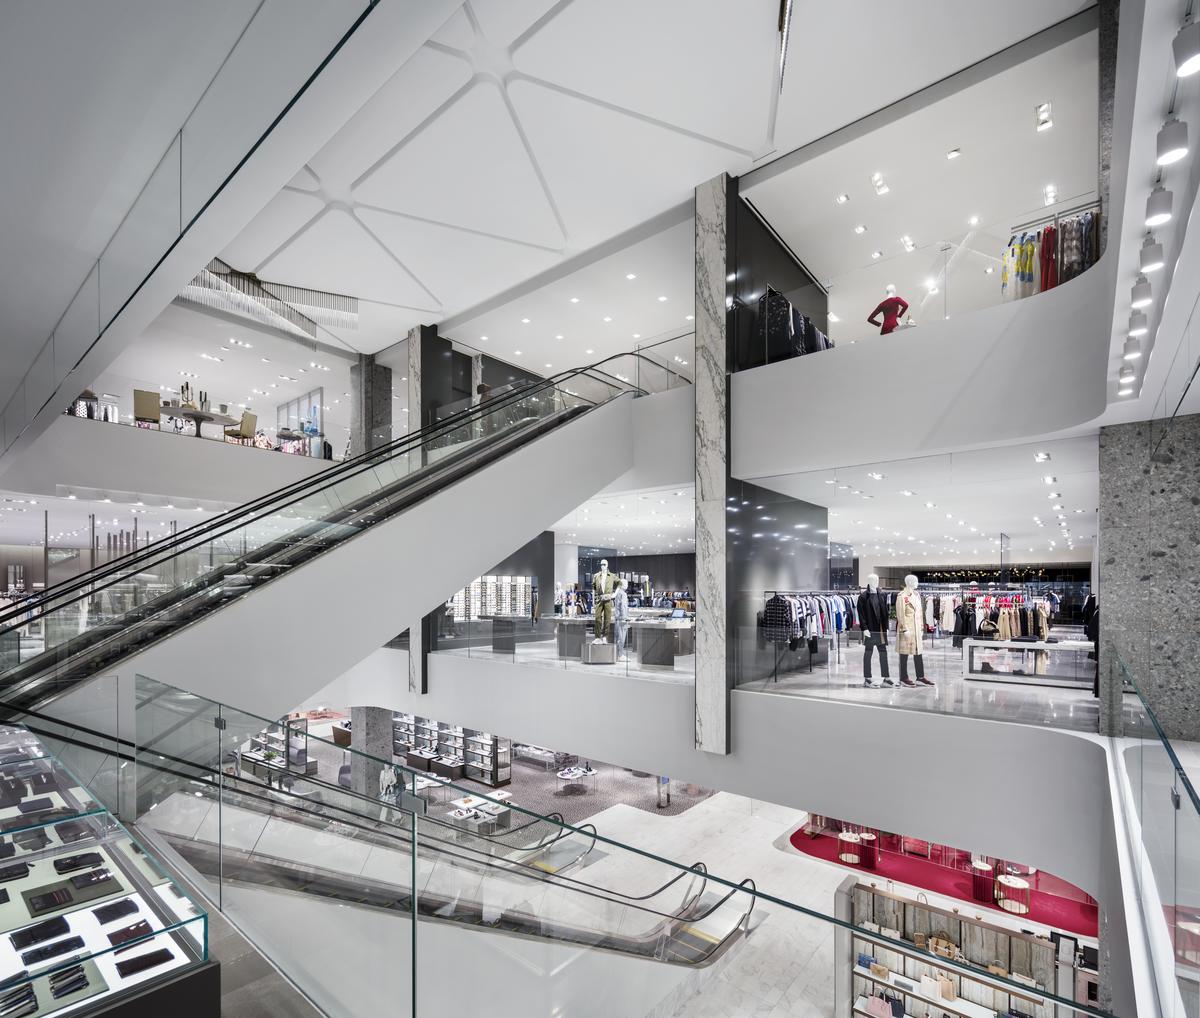 Neiman Marcus flagship store by Janson Goldstein, Related, AvroKO